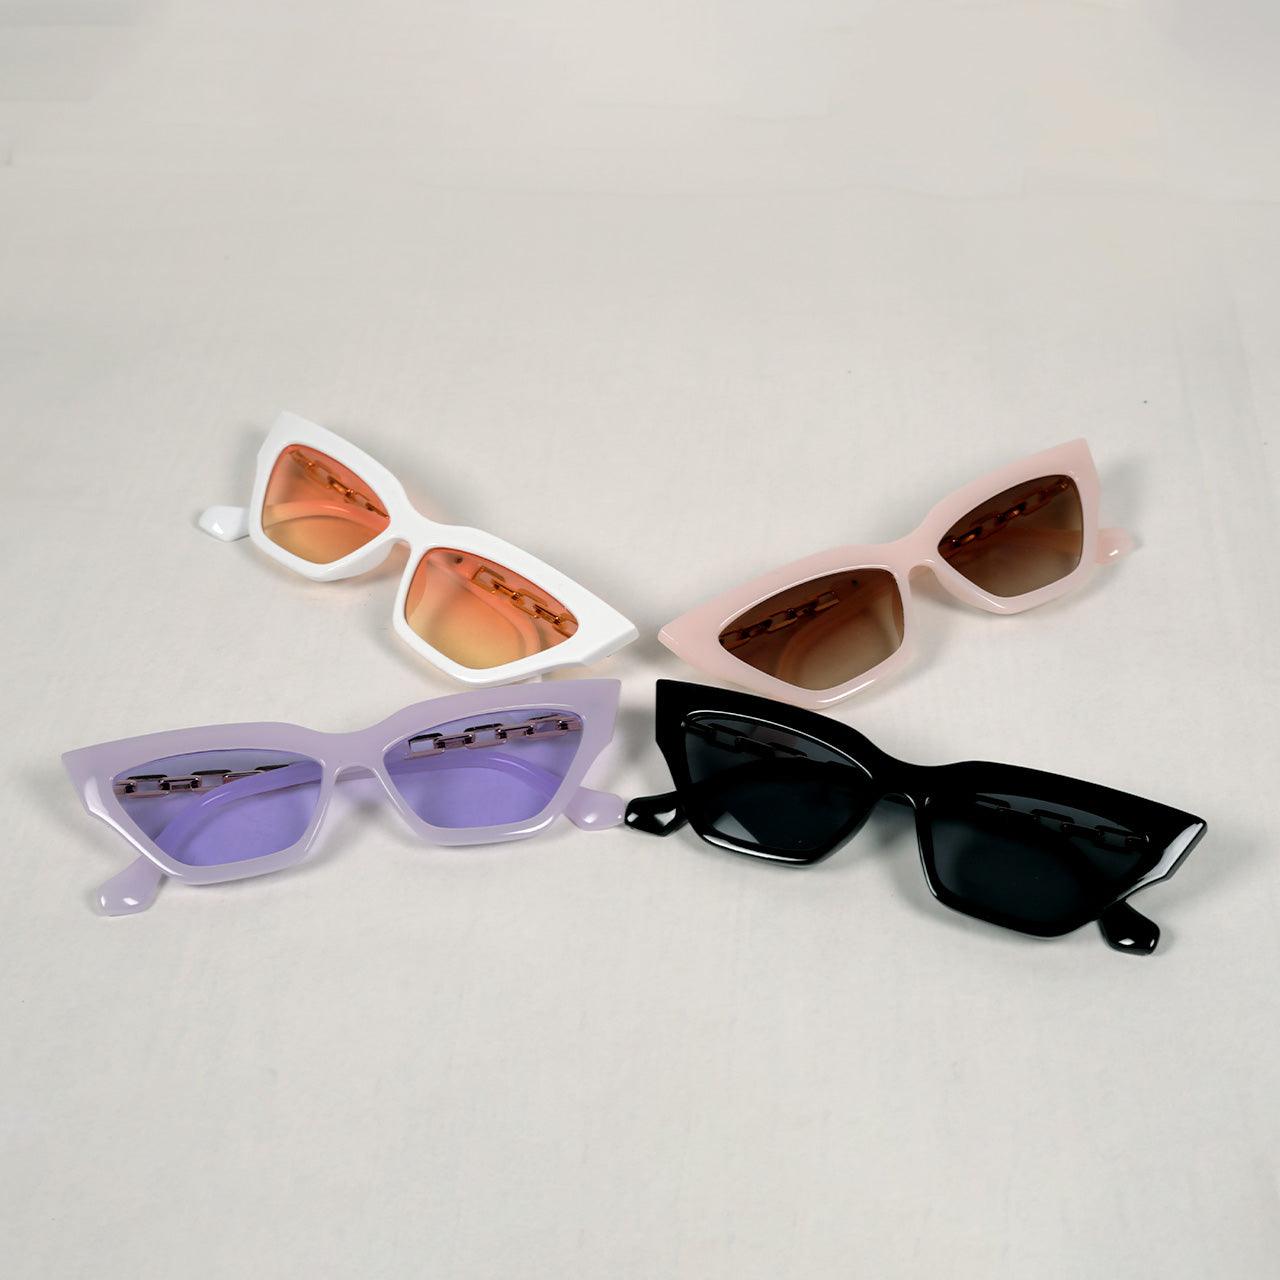 Black Chain Cateye Sunglasses